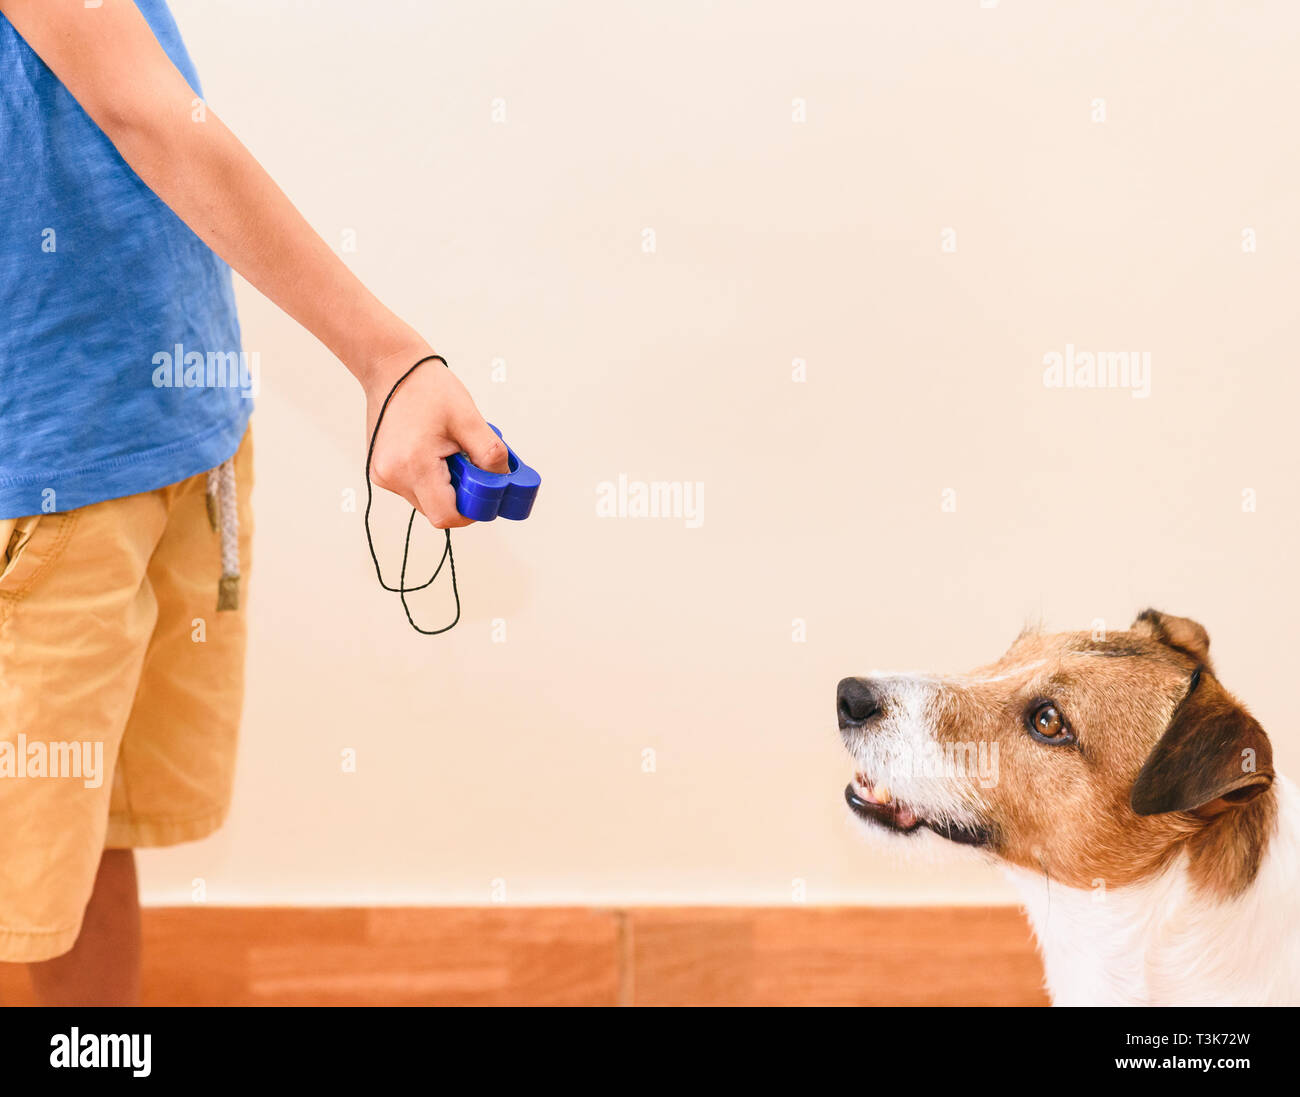 Konzept der positiven Verstärkung Hundetraining mit Kid mit Clicker für Gehorsam Übung Stockfoto